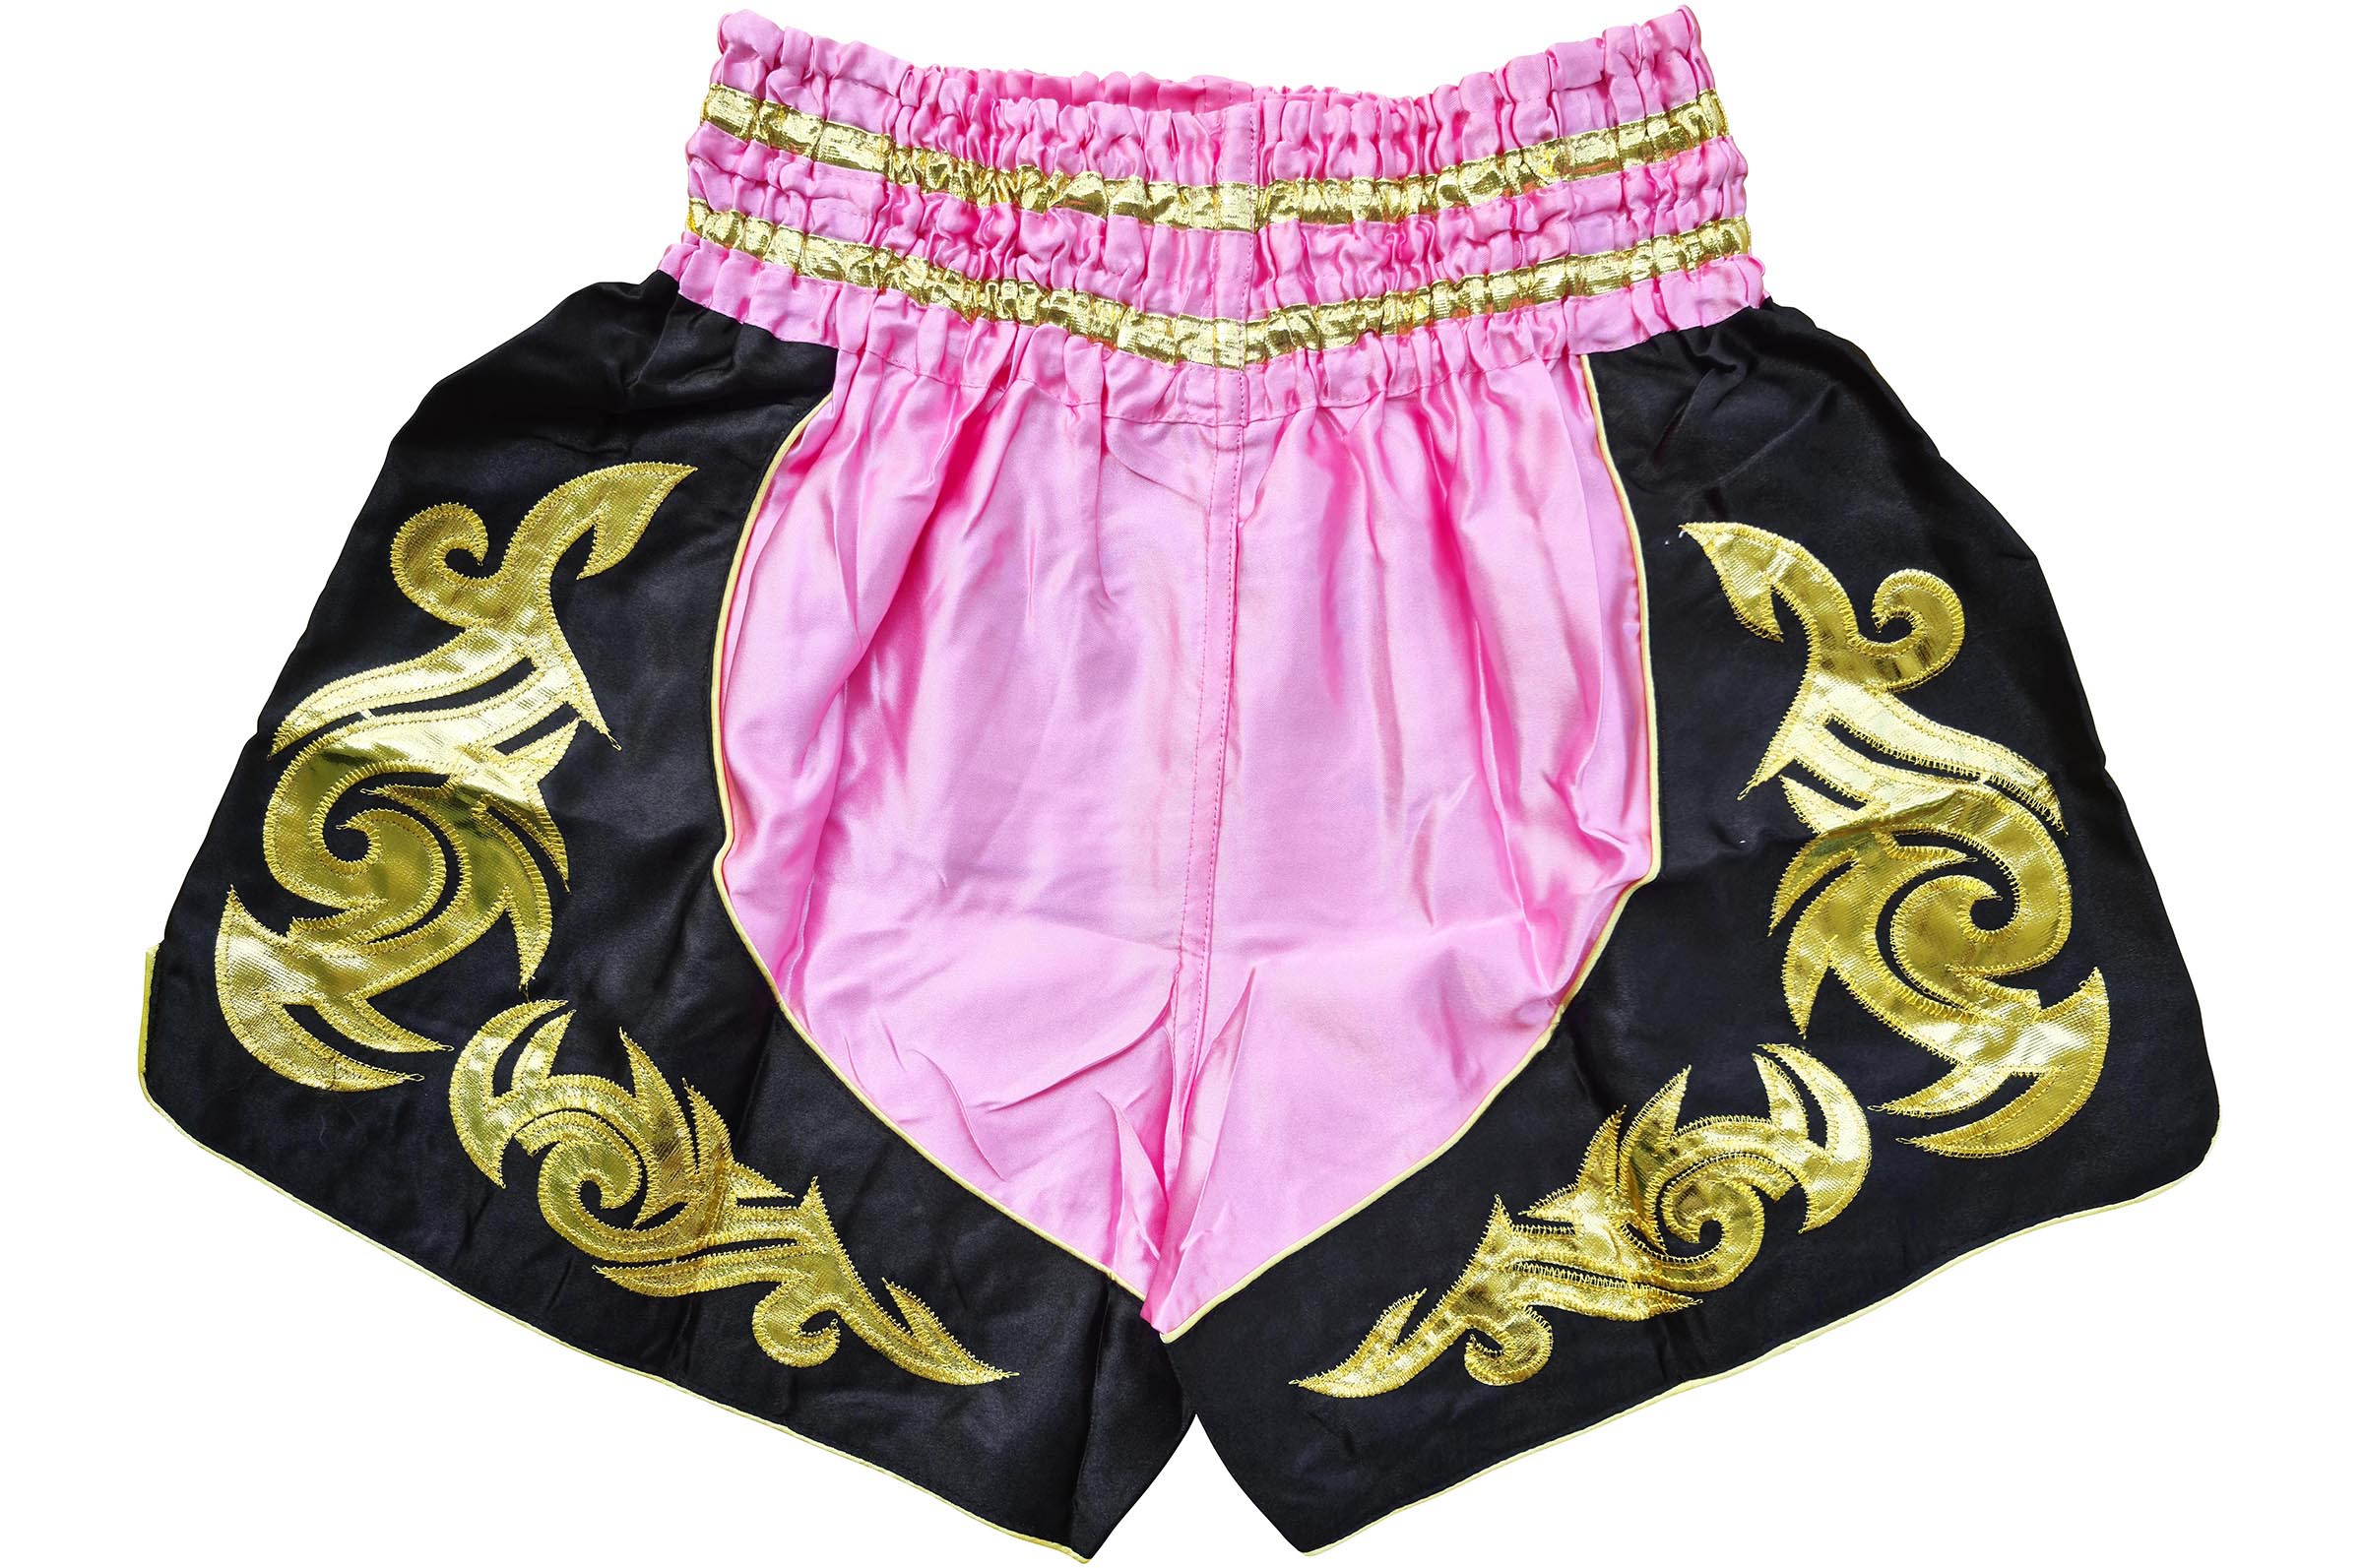 Buddha Pantalon Muay Thai Kick Boxing European Day Negro